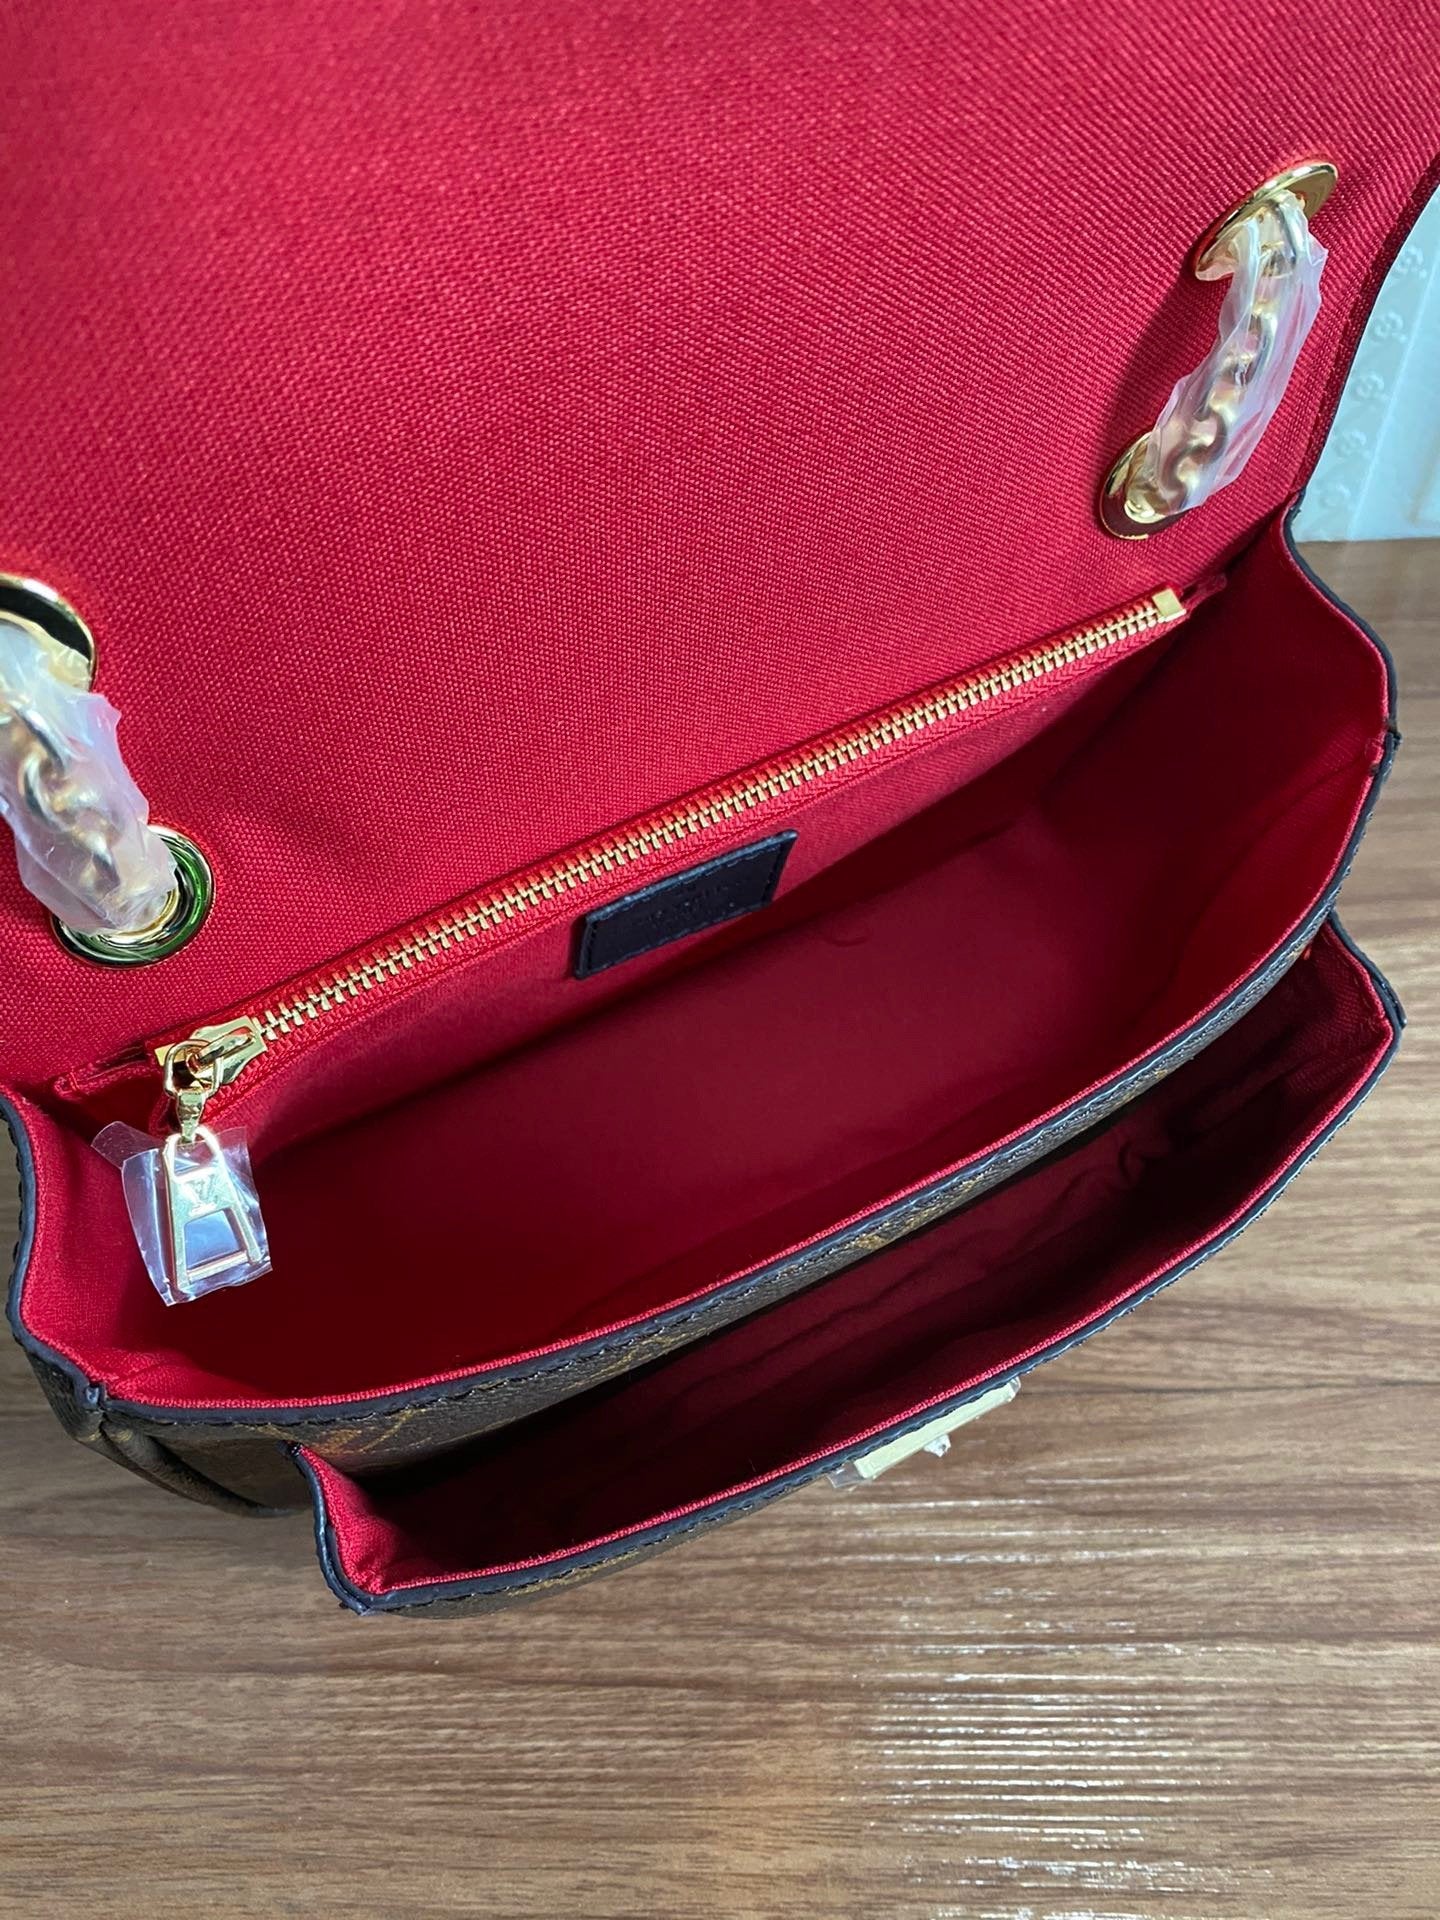 EI - Top Handbags LUV 022